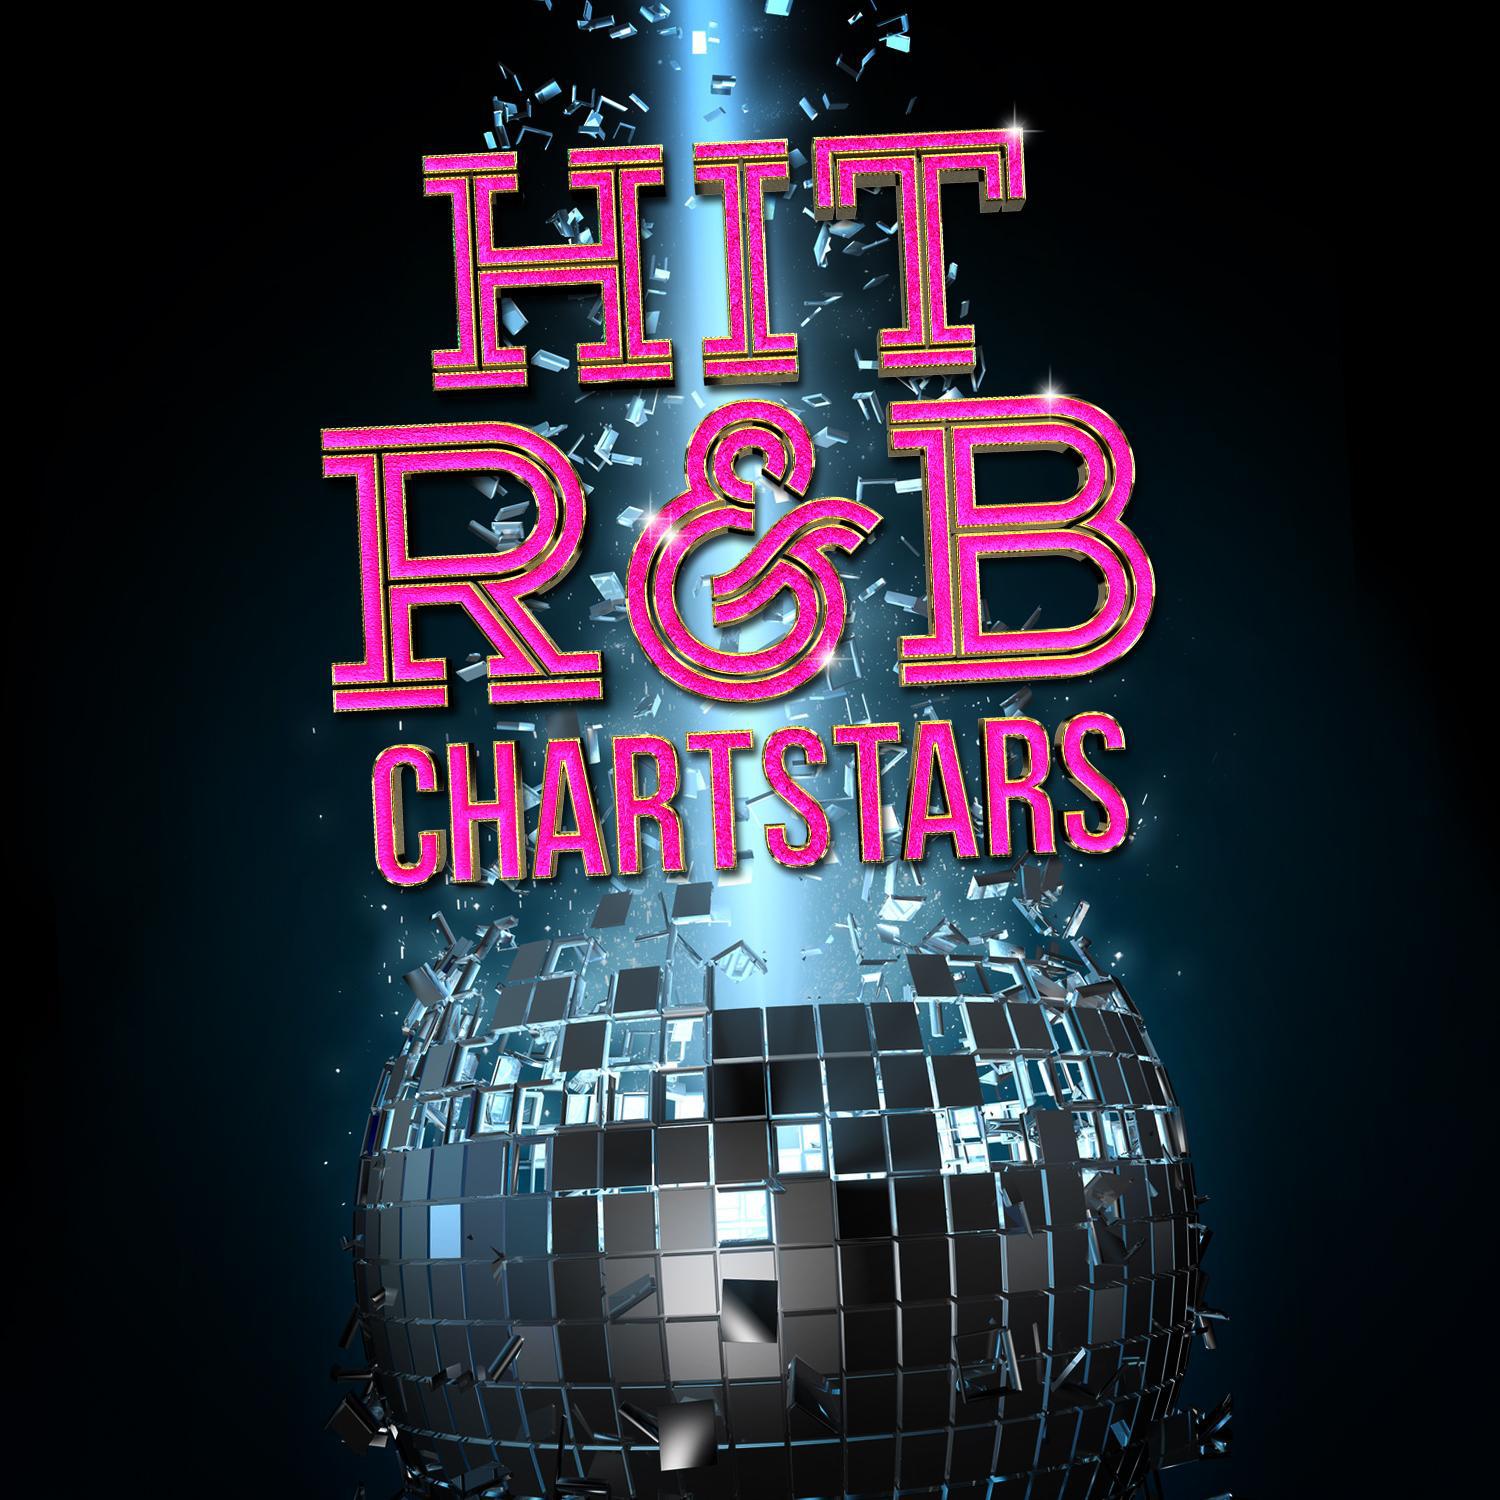 Hit R&B Chartstars